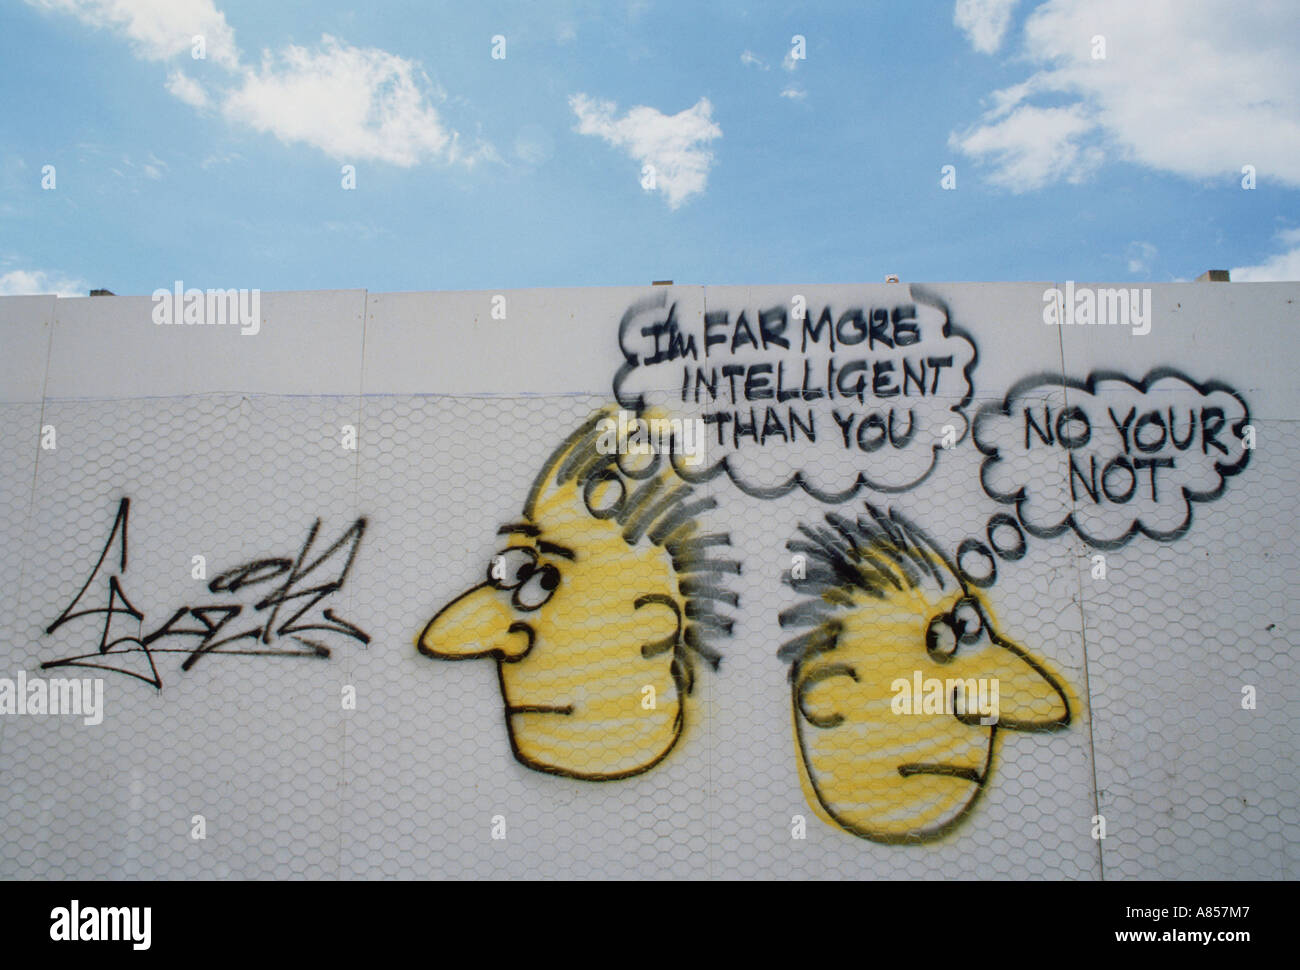 Artwork. Graffiti message painted on wall. Comical cartoon "Intelligence". Stock Photo